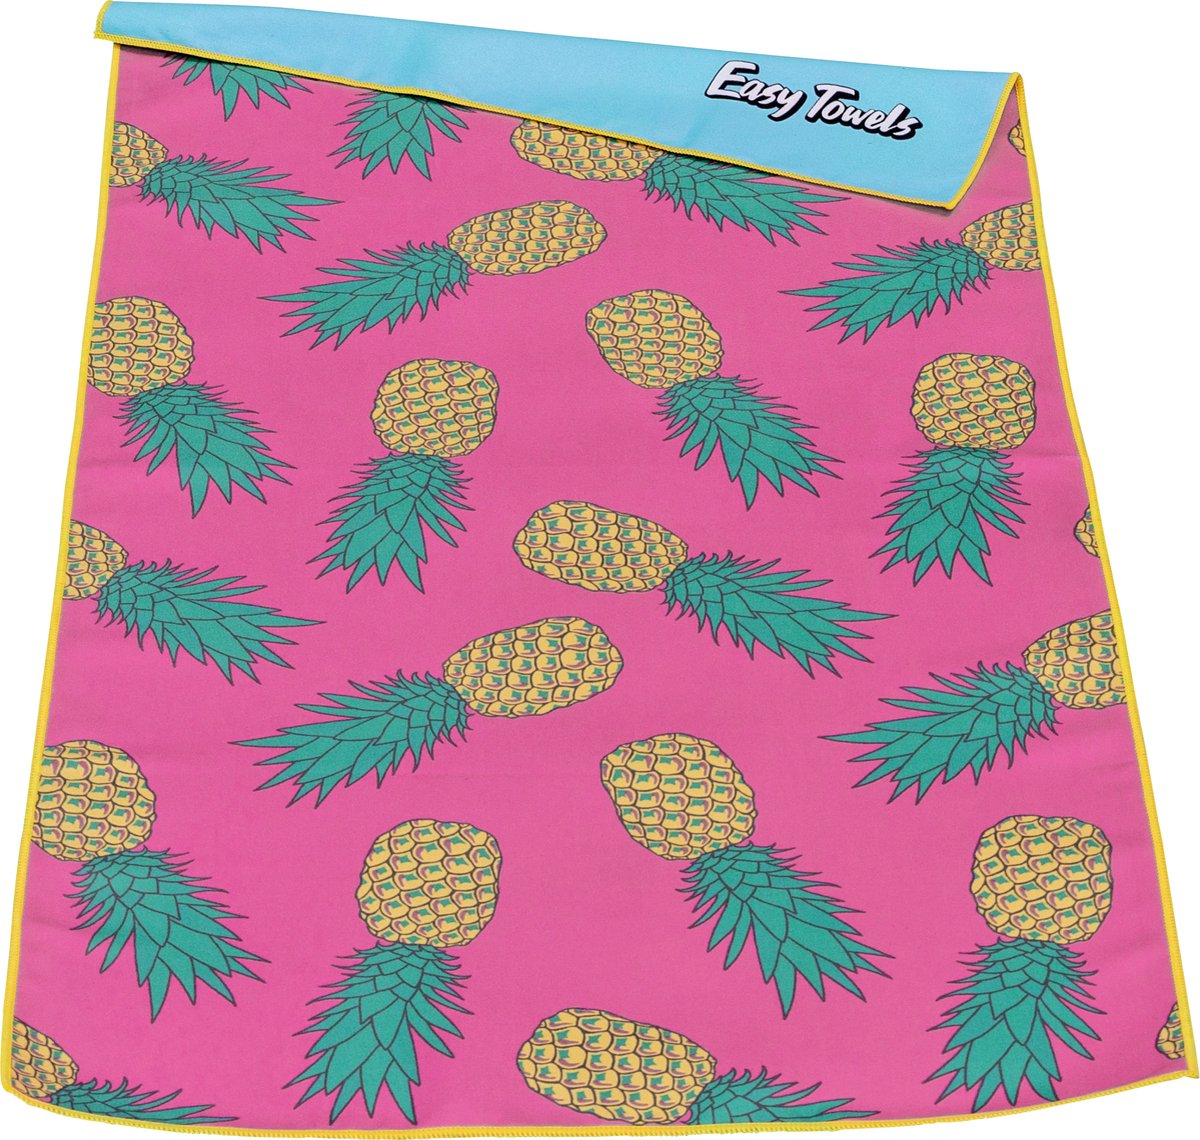 Easy Towels - Sporthanddoek Fitness - Microvezel - Ananas Print